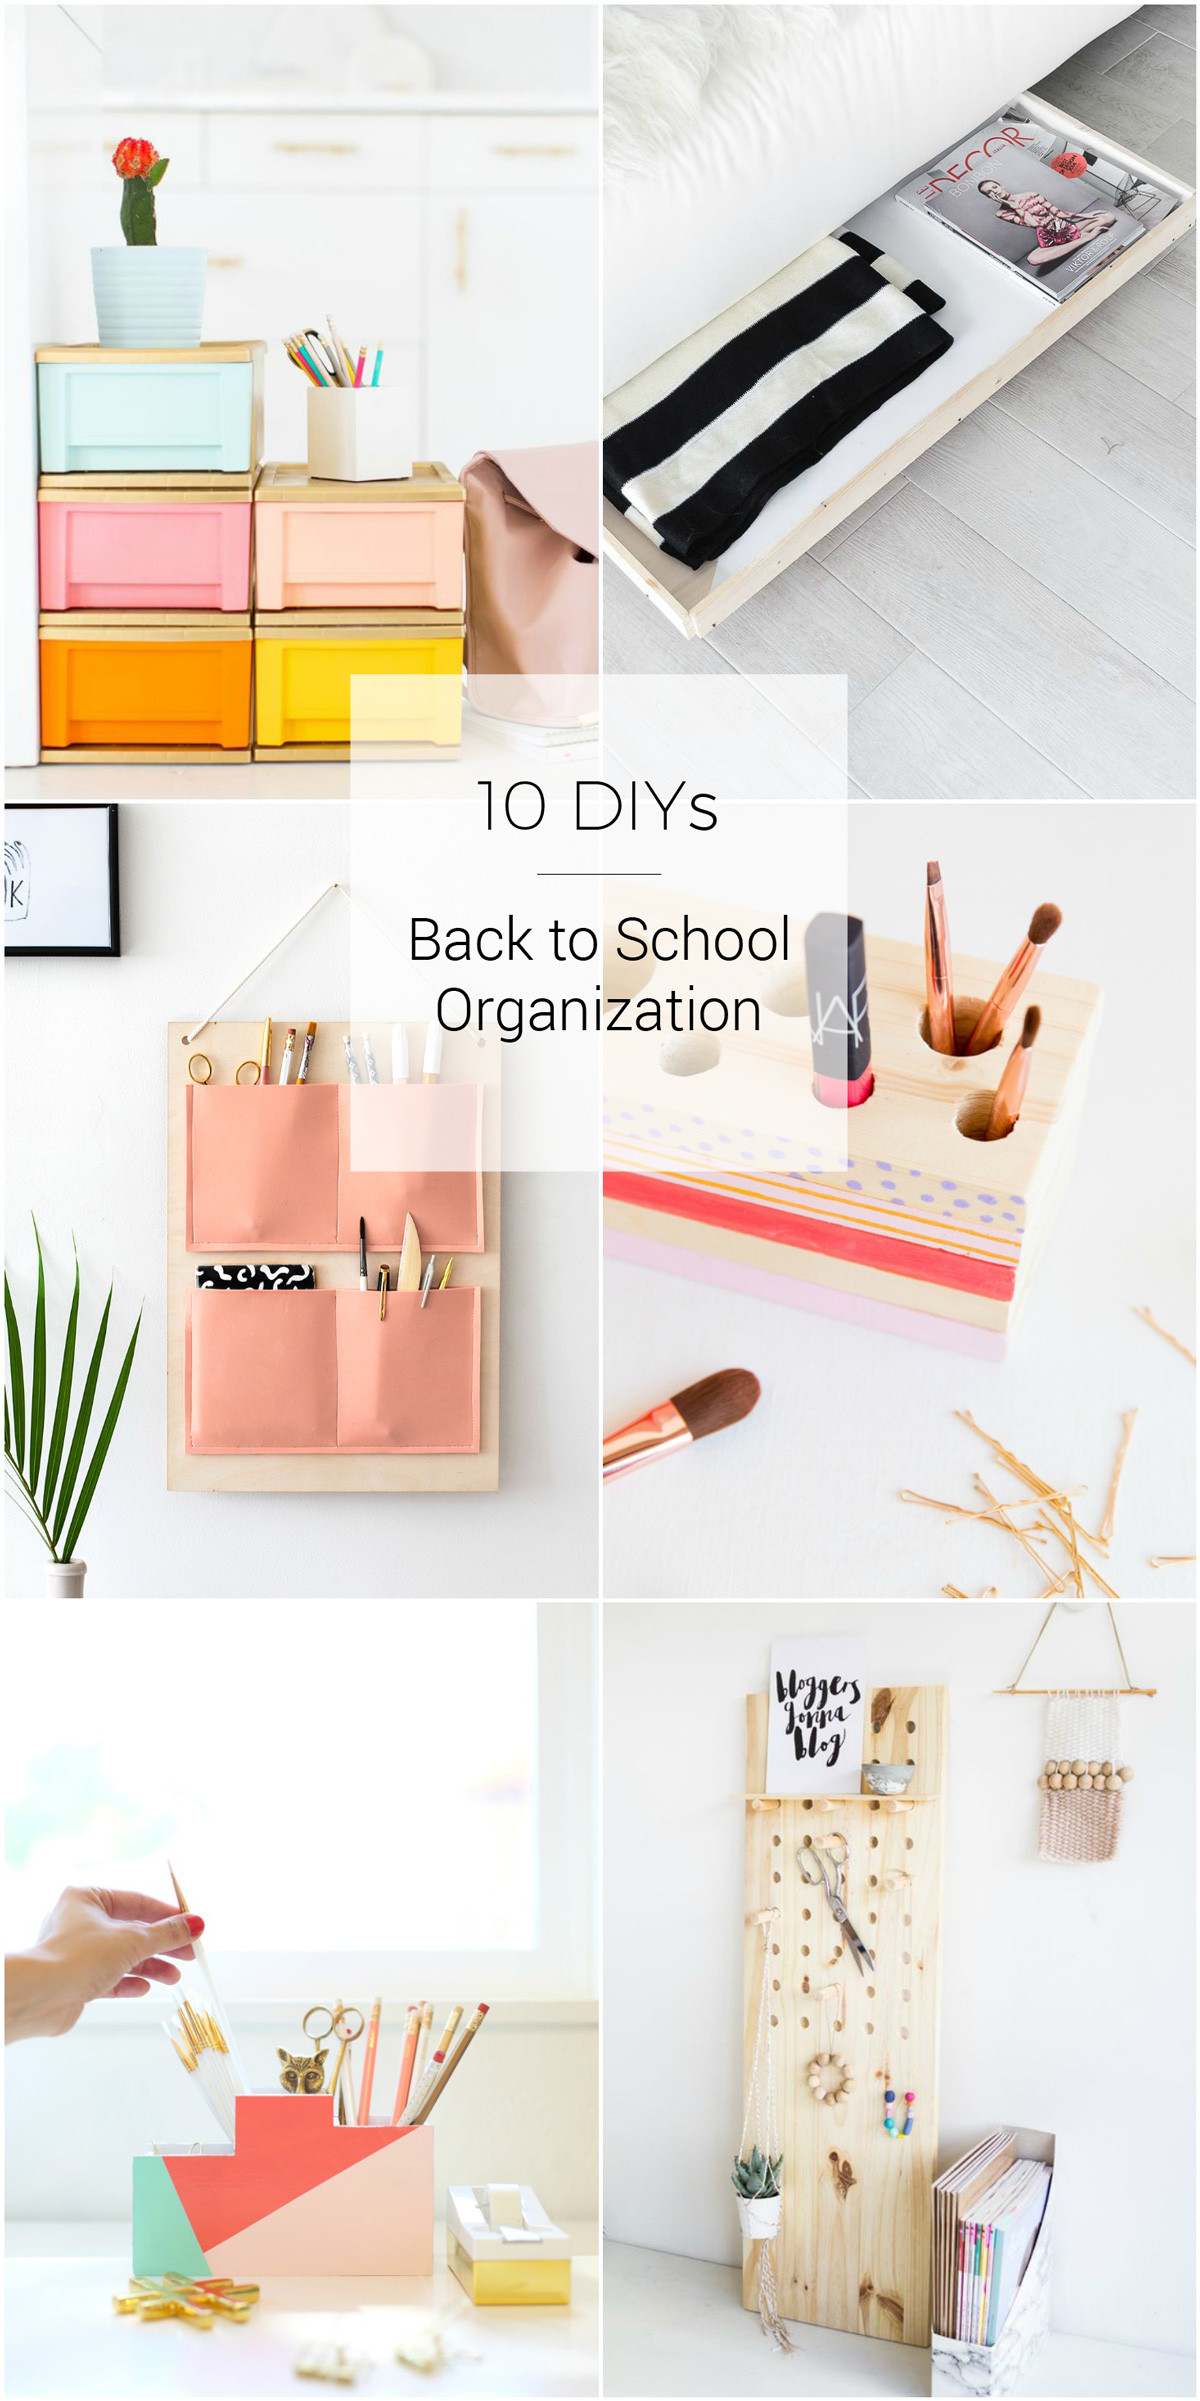 DIY Projects For Organization
 10 DIY Ideas for Back to School Organization